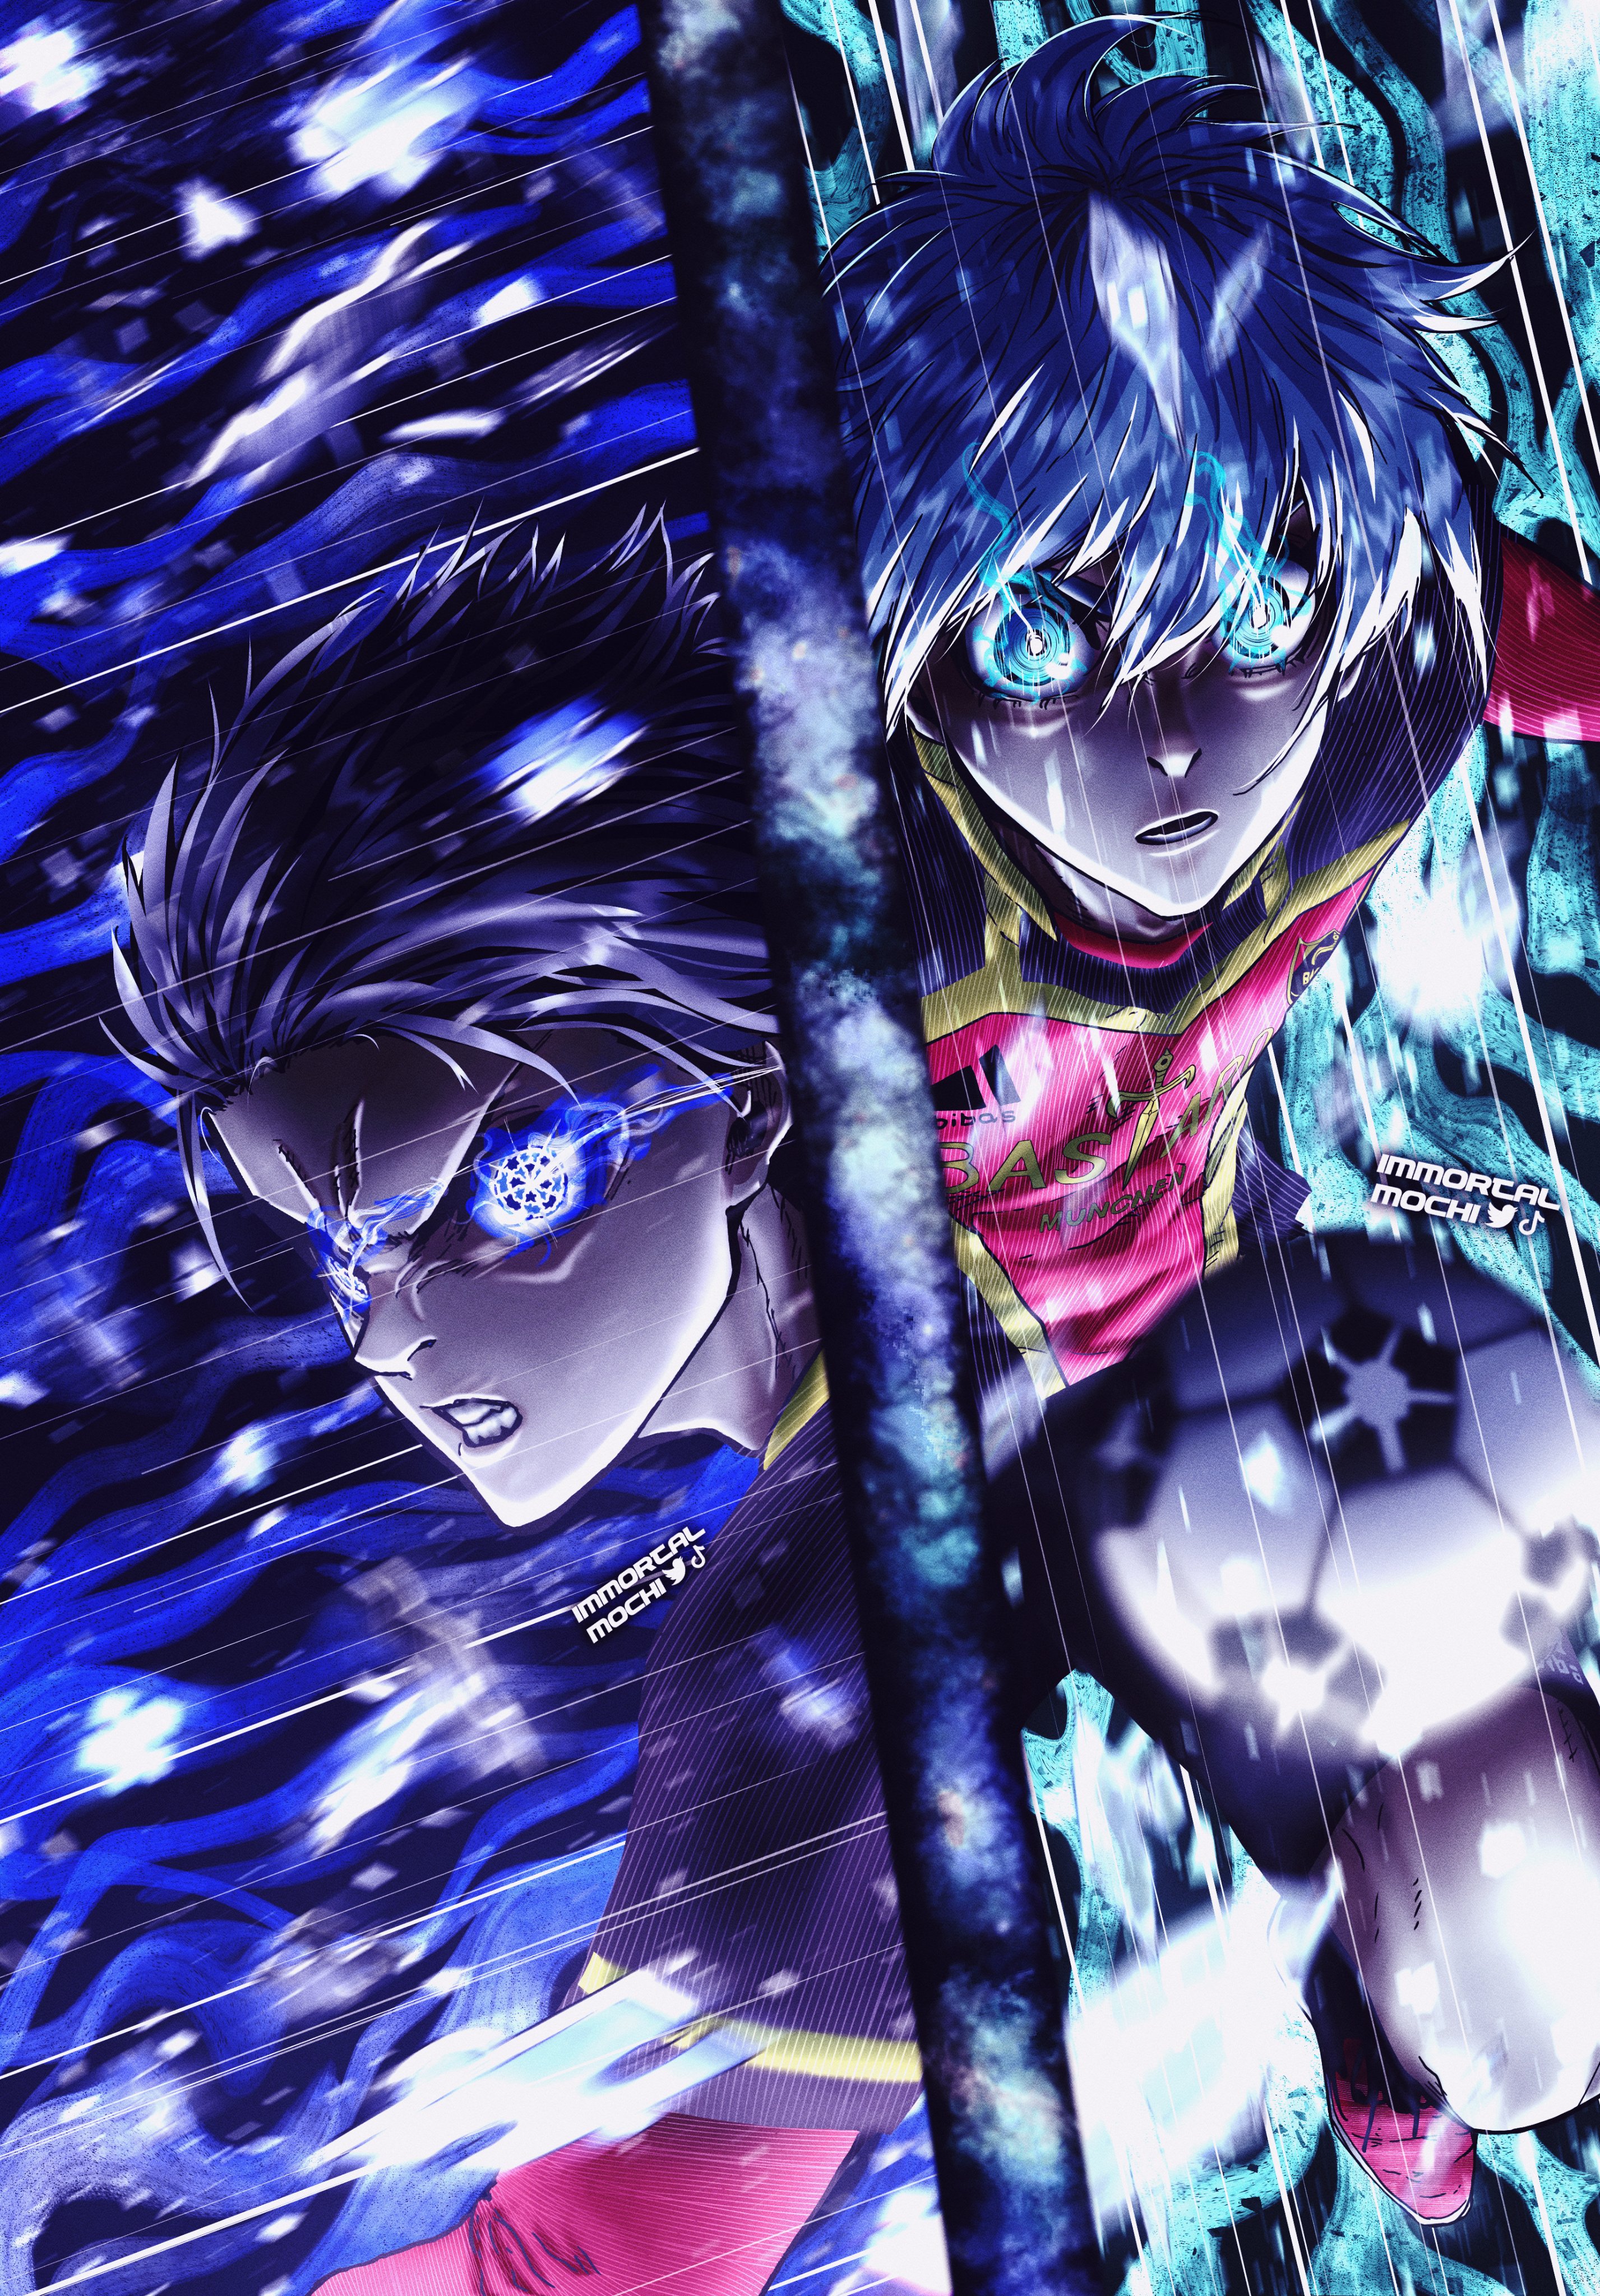 m͓̽o͓̽c͓̽h͓̽i͓̽ on X: Isagi & Hiori Ch.236 colored #isagiyoichi #hioriyo # bluelock #mangacoloring  / X